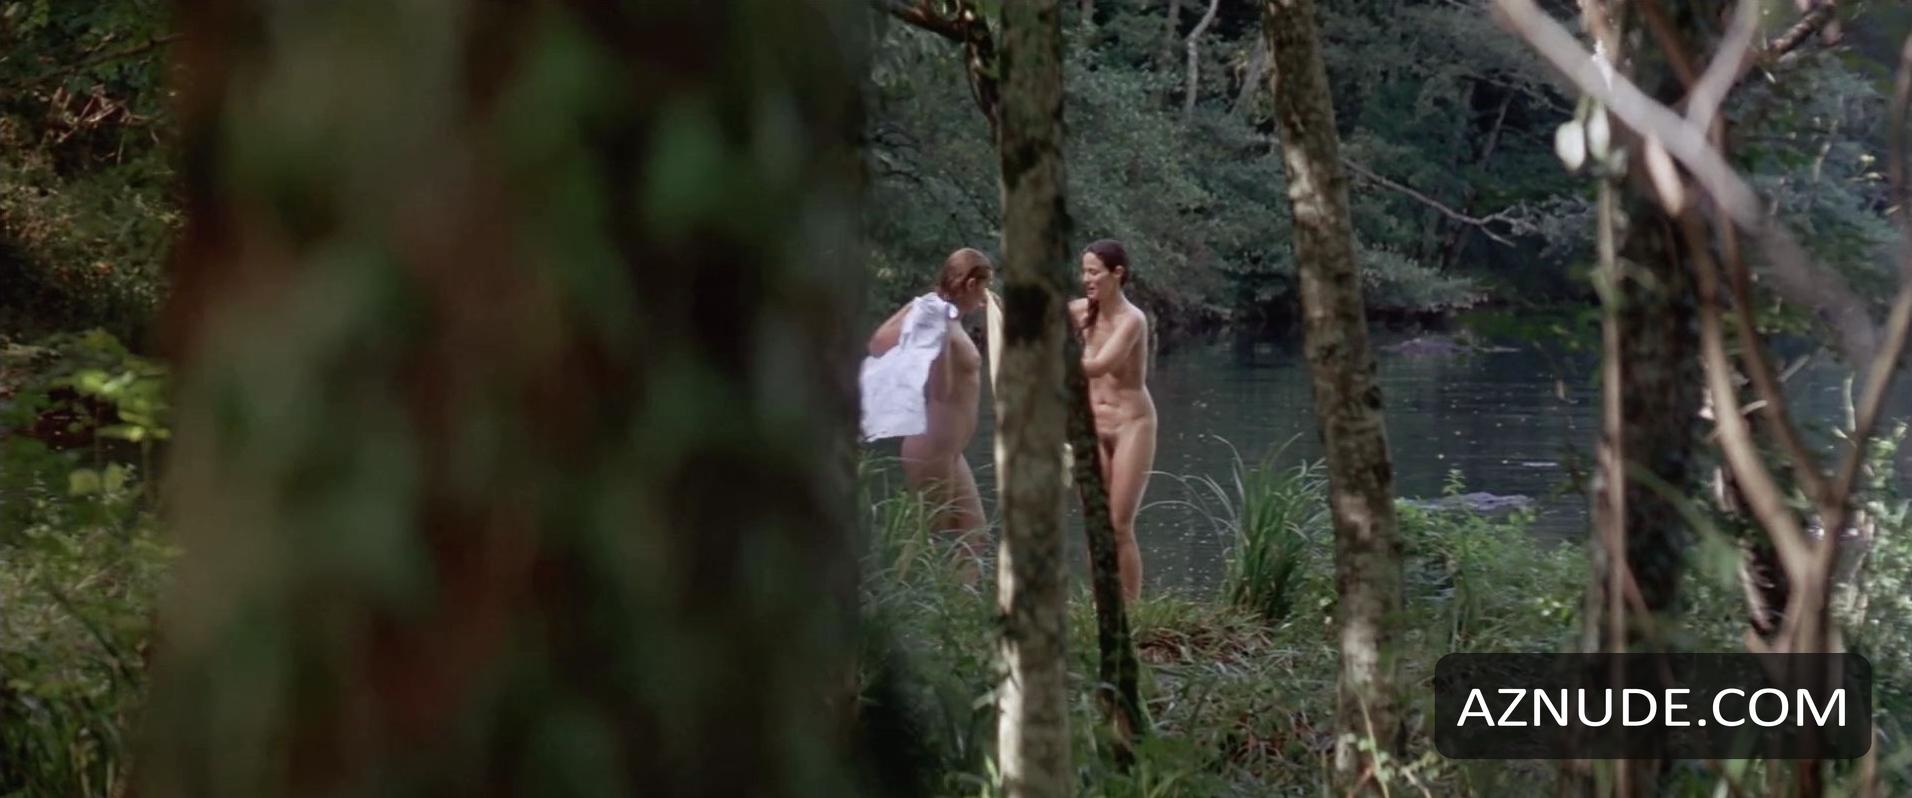 The Backwoods Nude Scenes Aznude 